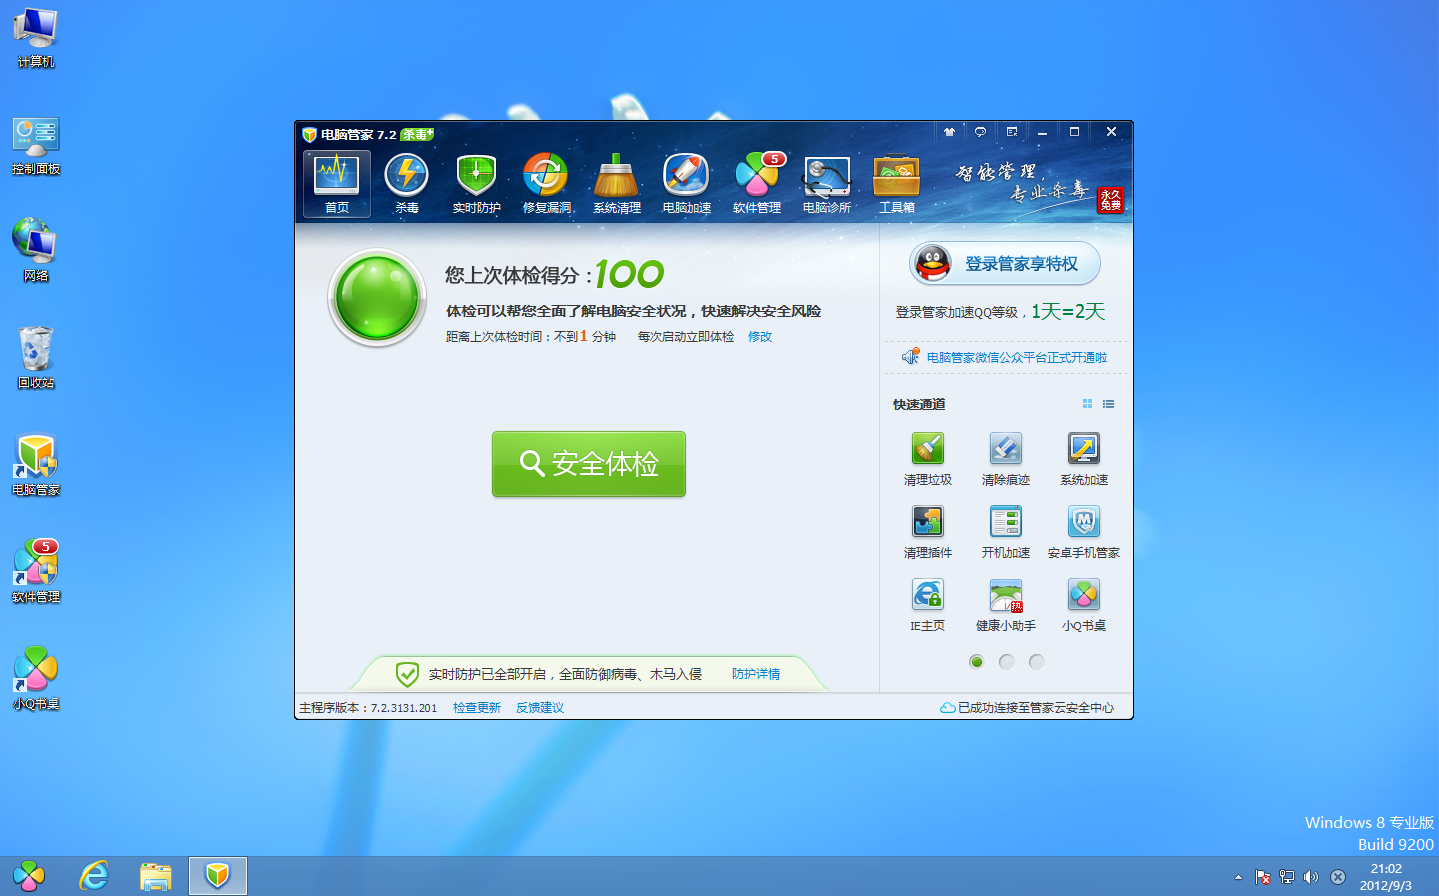 QQ电脑管家 2合1杀毒版 v8.4(10040) 全面兼容windows8 中文官方安装版